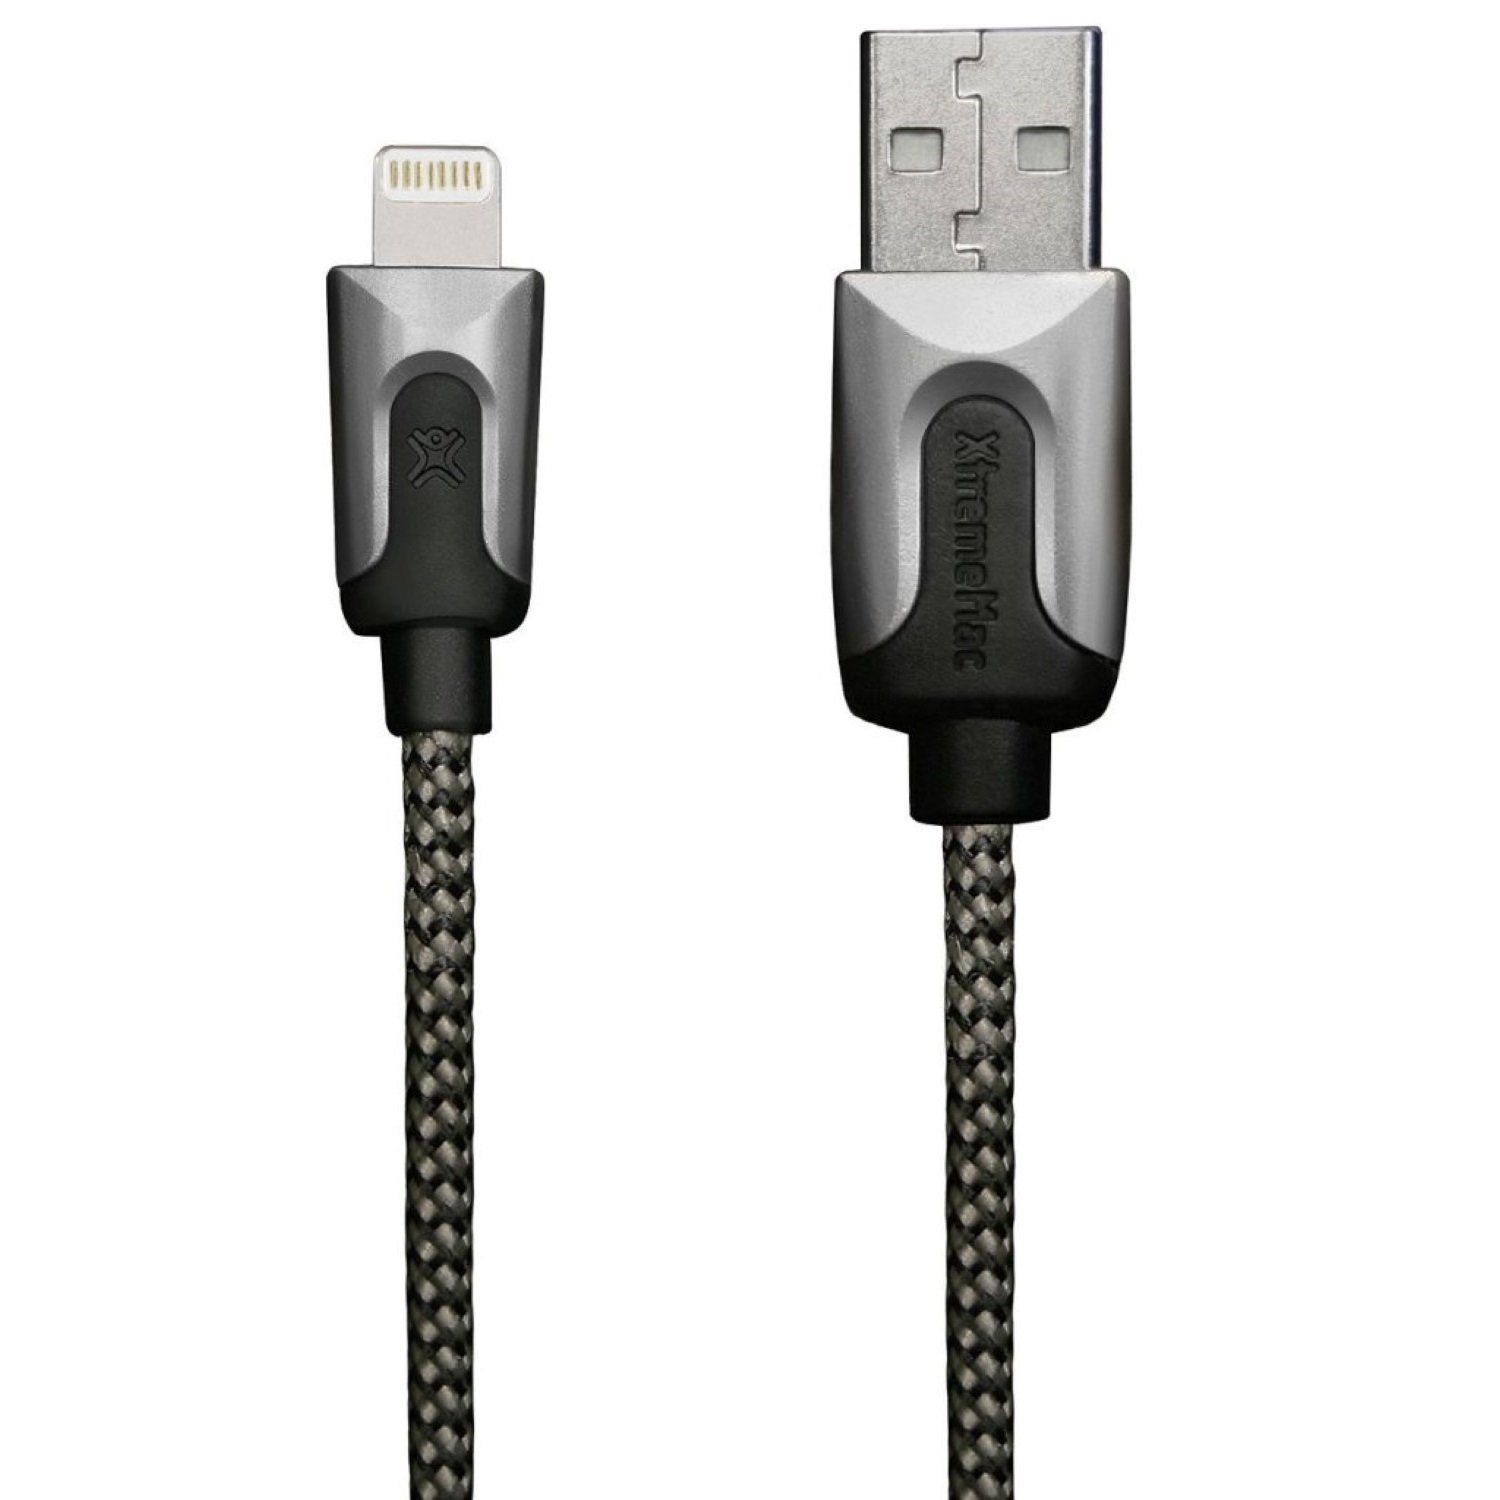 XtremeMac HQ Premium Lightning-Kabel 2m Black Smartphone-Kabel, USB Typ A, Apple Lightning, Lightning-Stecker Laden + Datenkabel für Apple iPhone, iPad und iPod